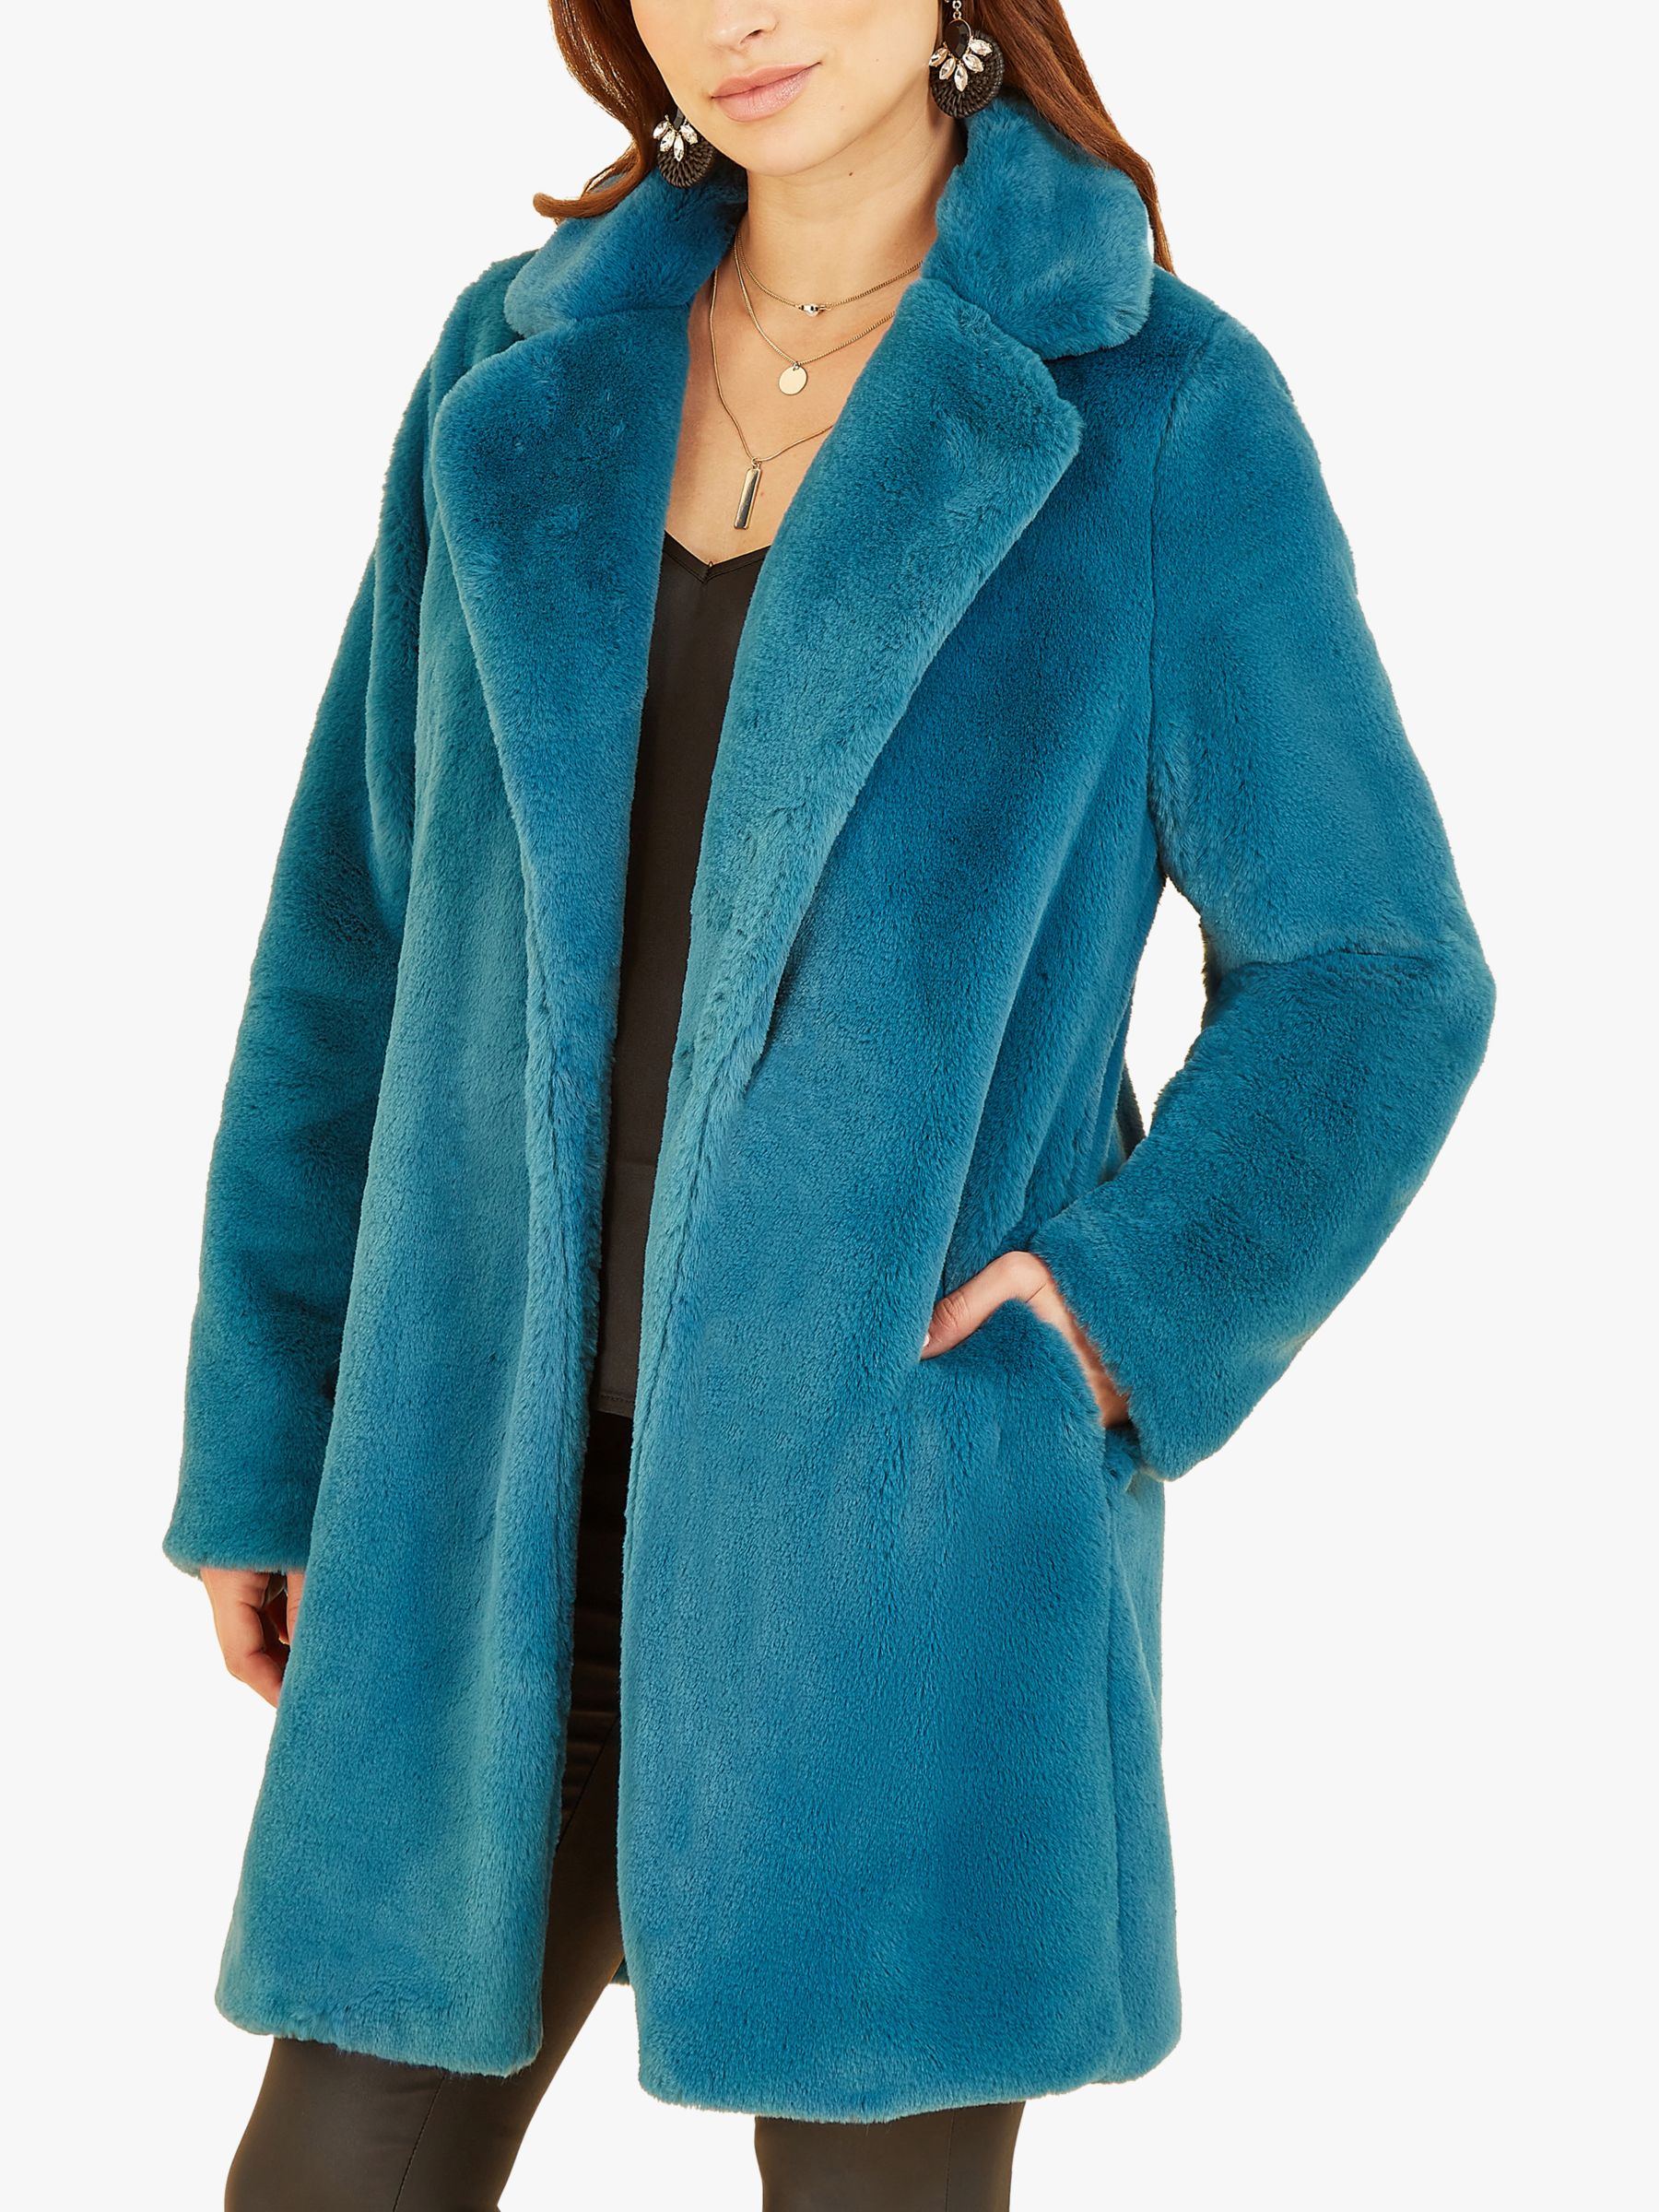 Yumi Faux Fur Coat